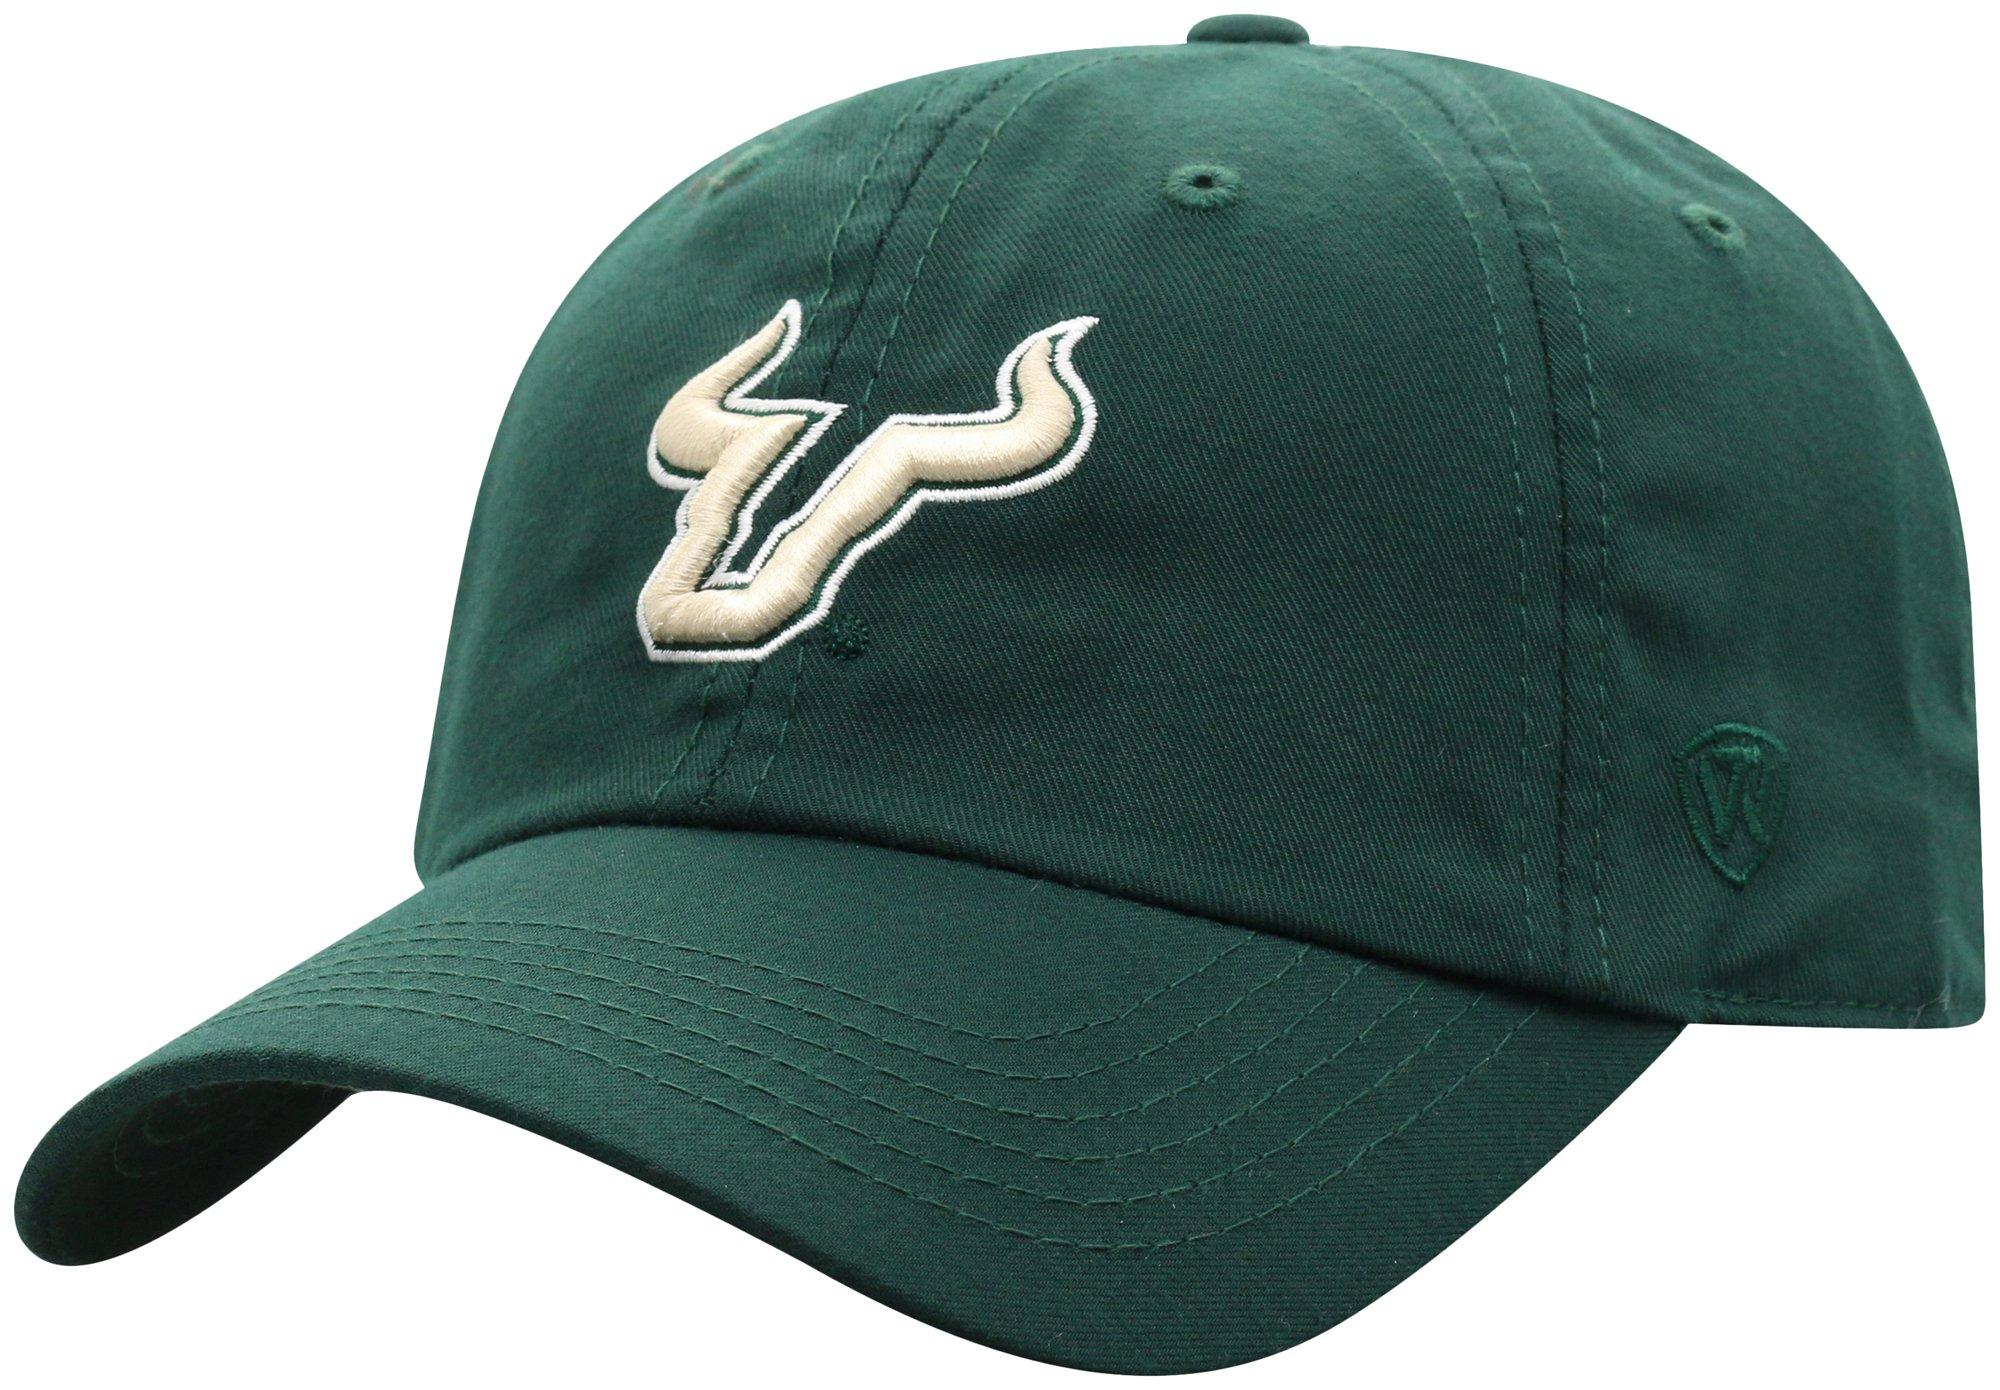 USF Bulls Solid Adjustable Hat